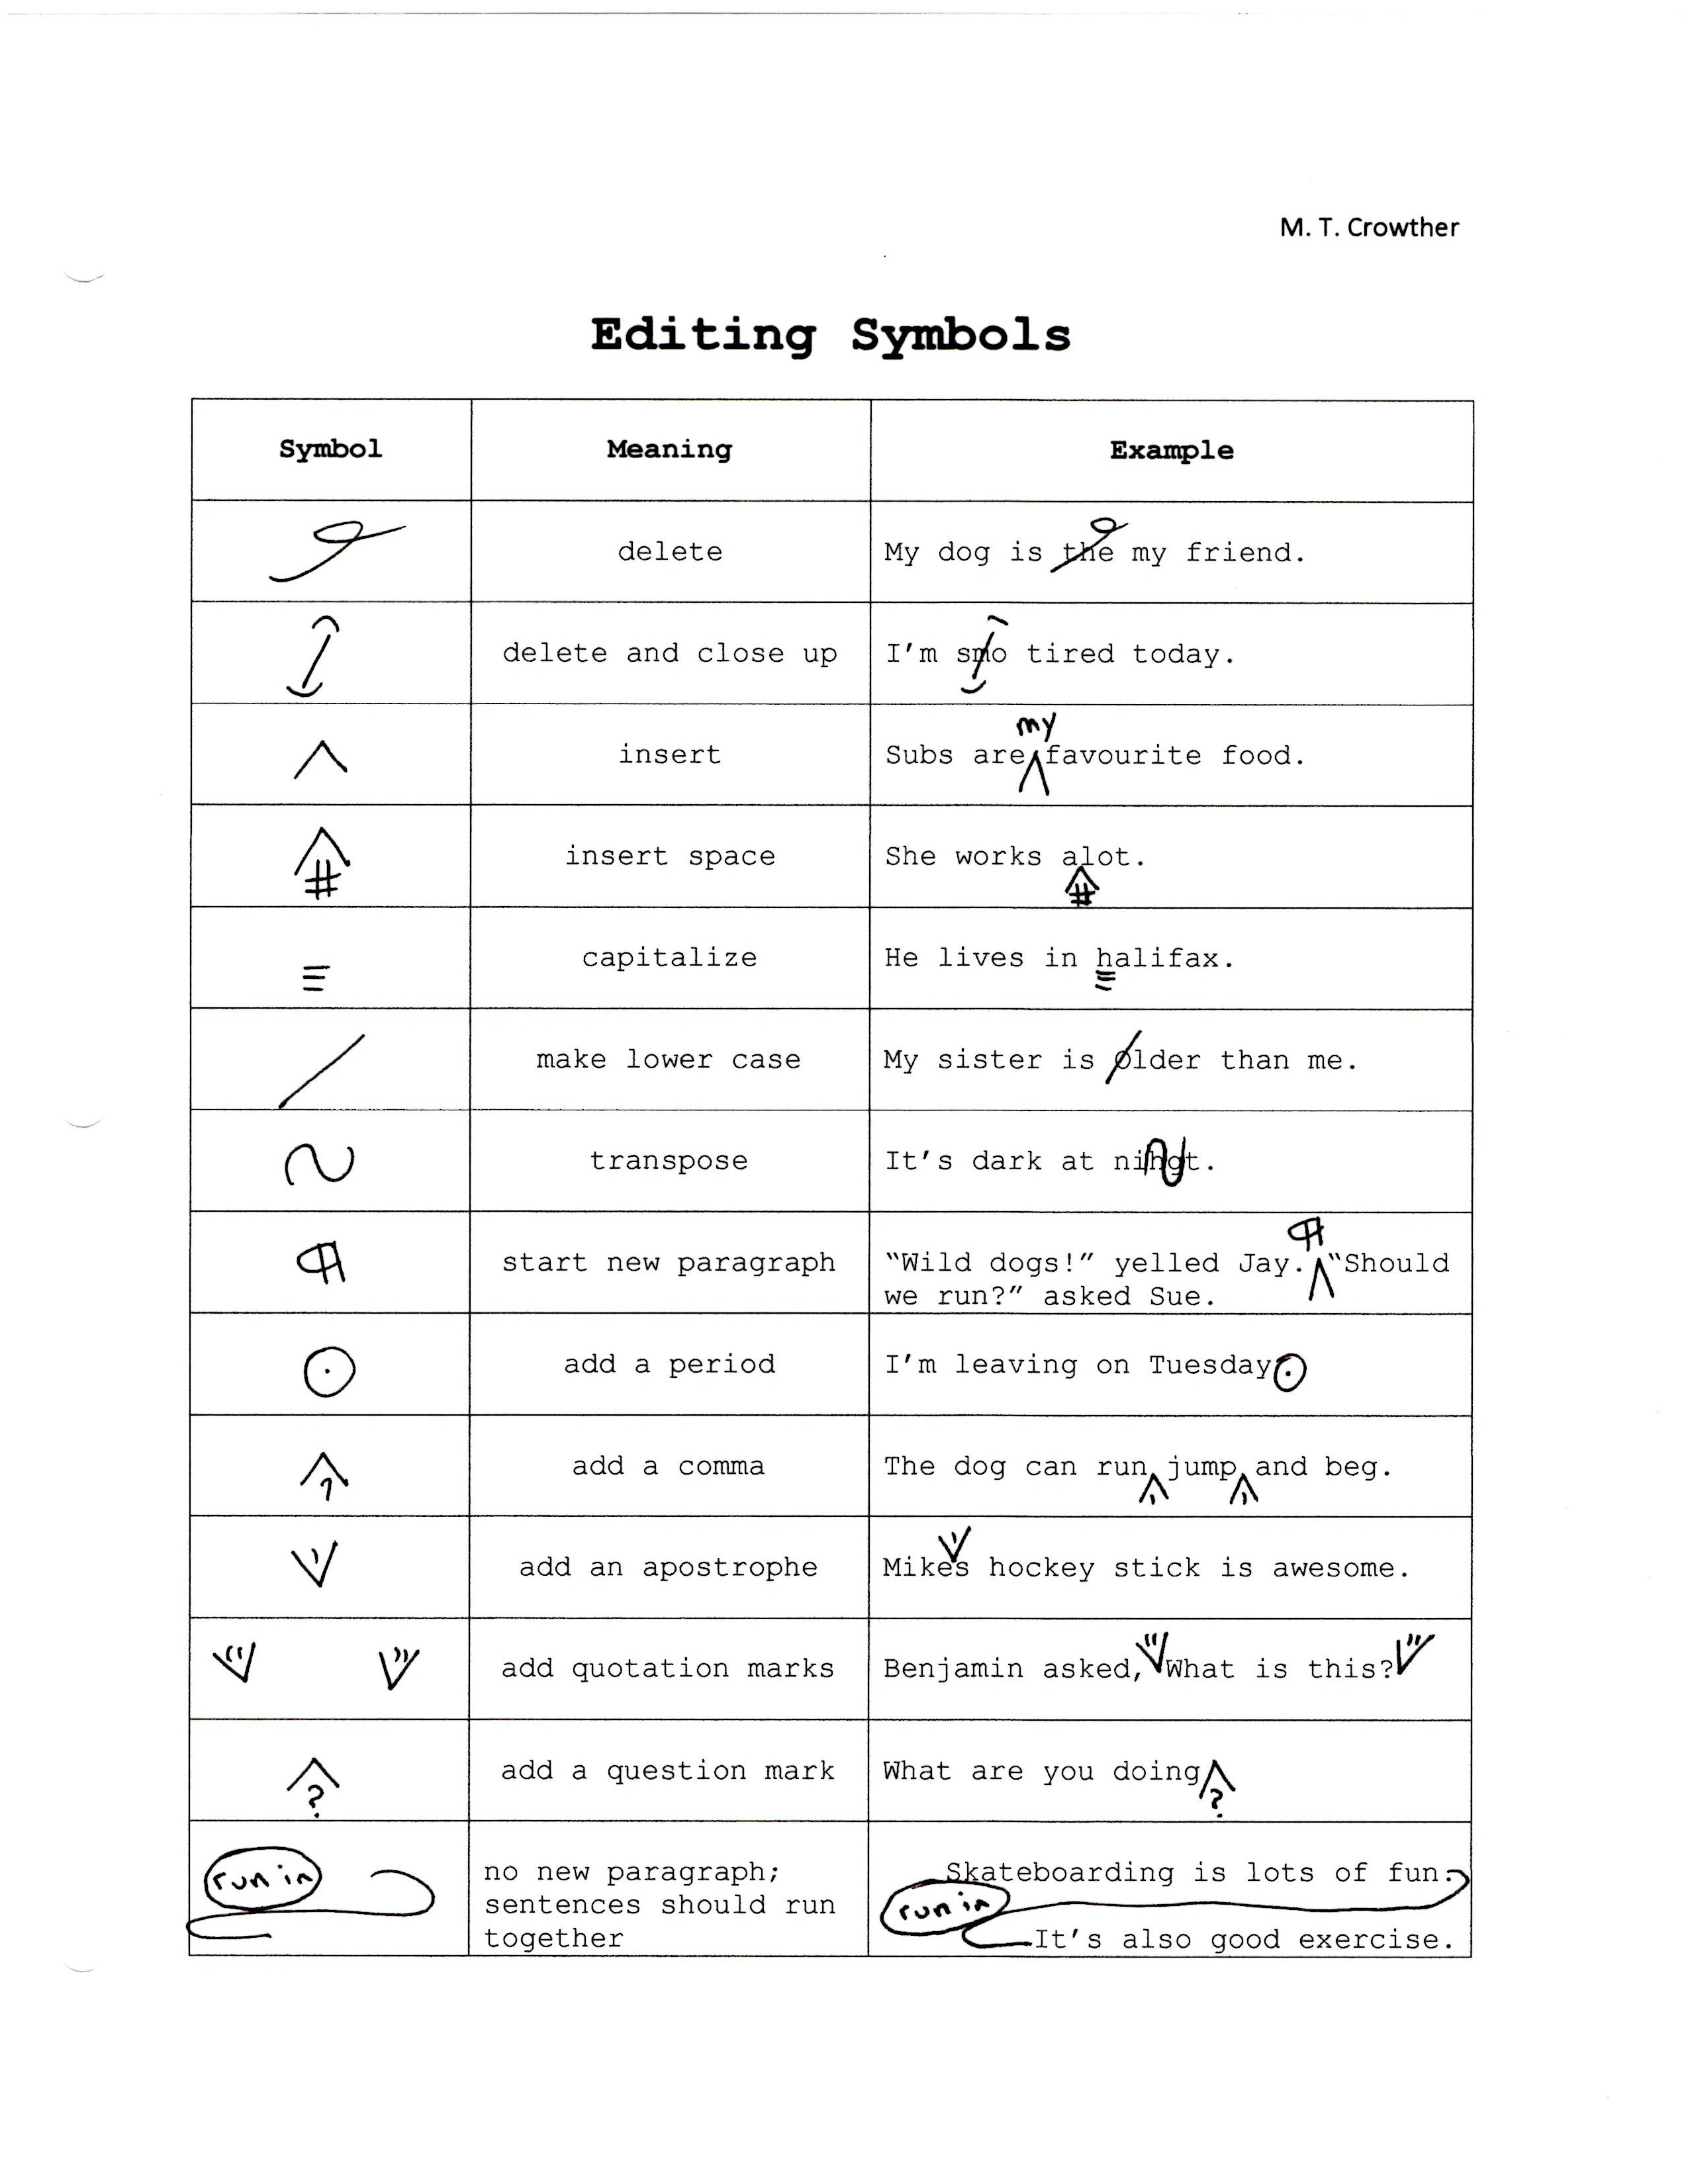  Editing  Essay Symbols List of proofreader s marks 